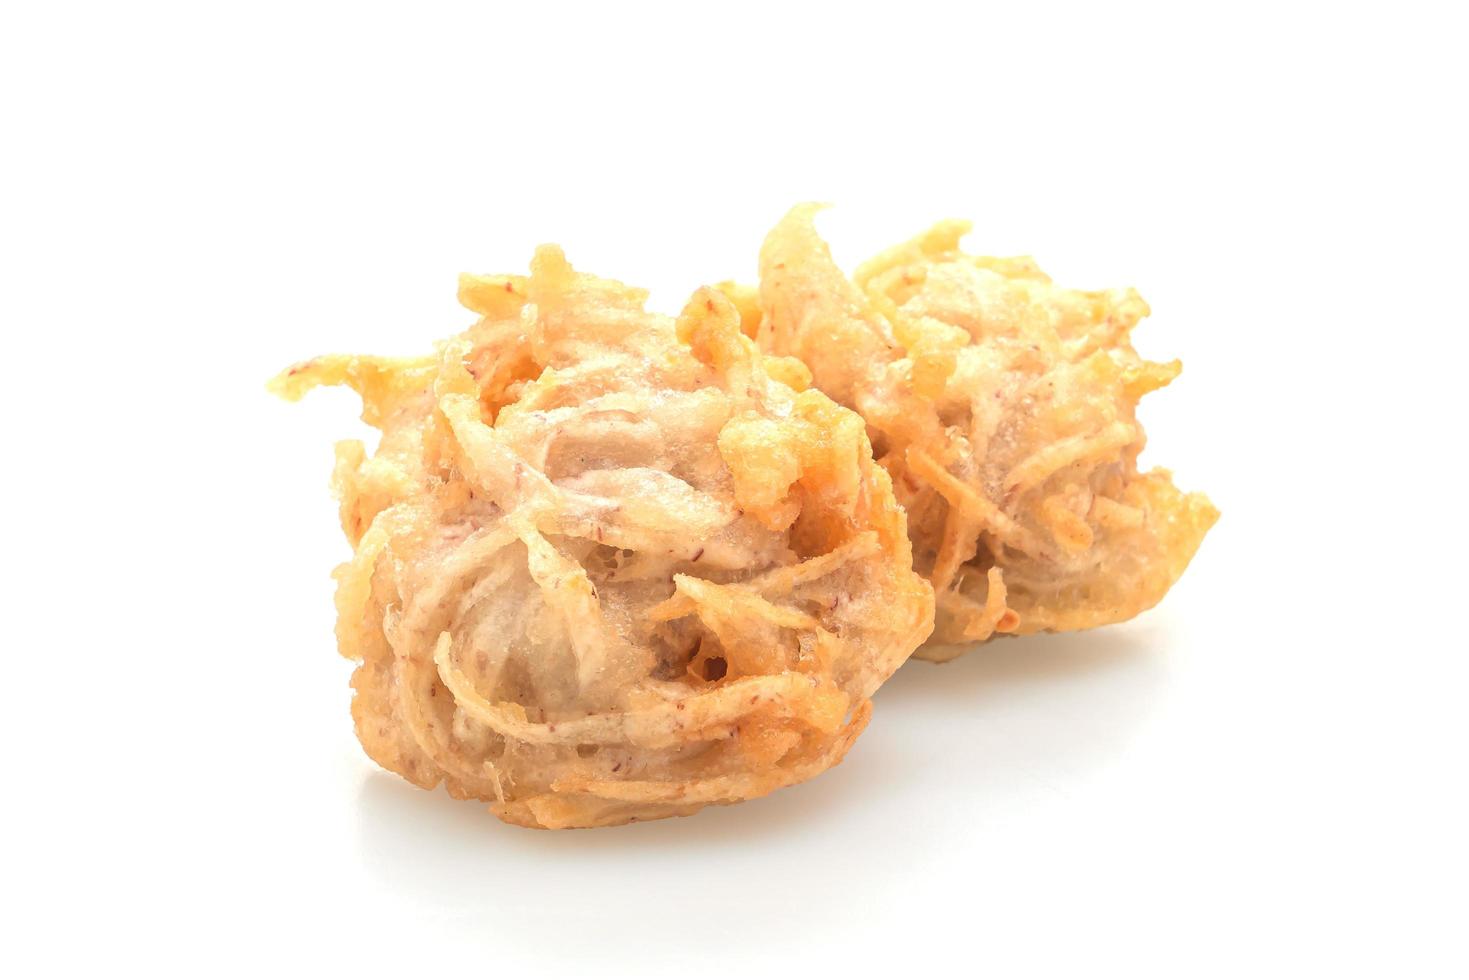 Fried taro isolated on white background - vegan and vegetarian food style photo